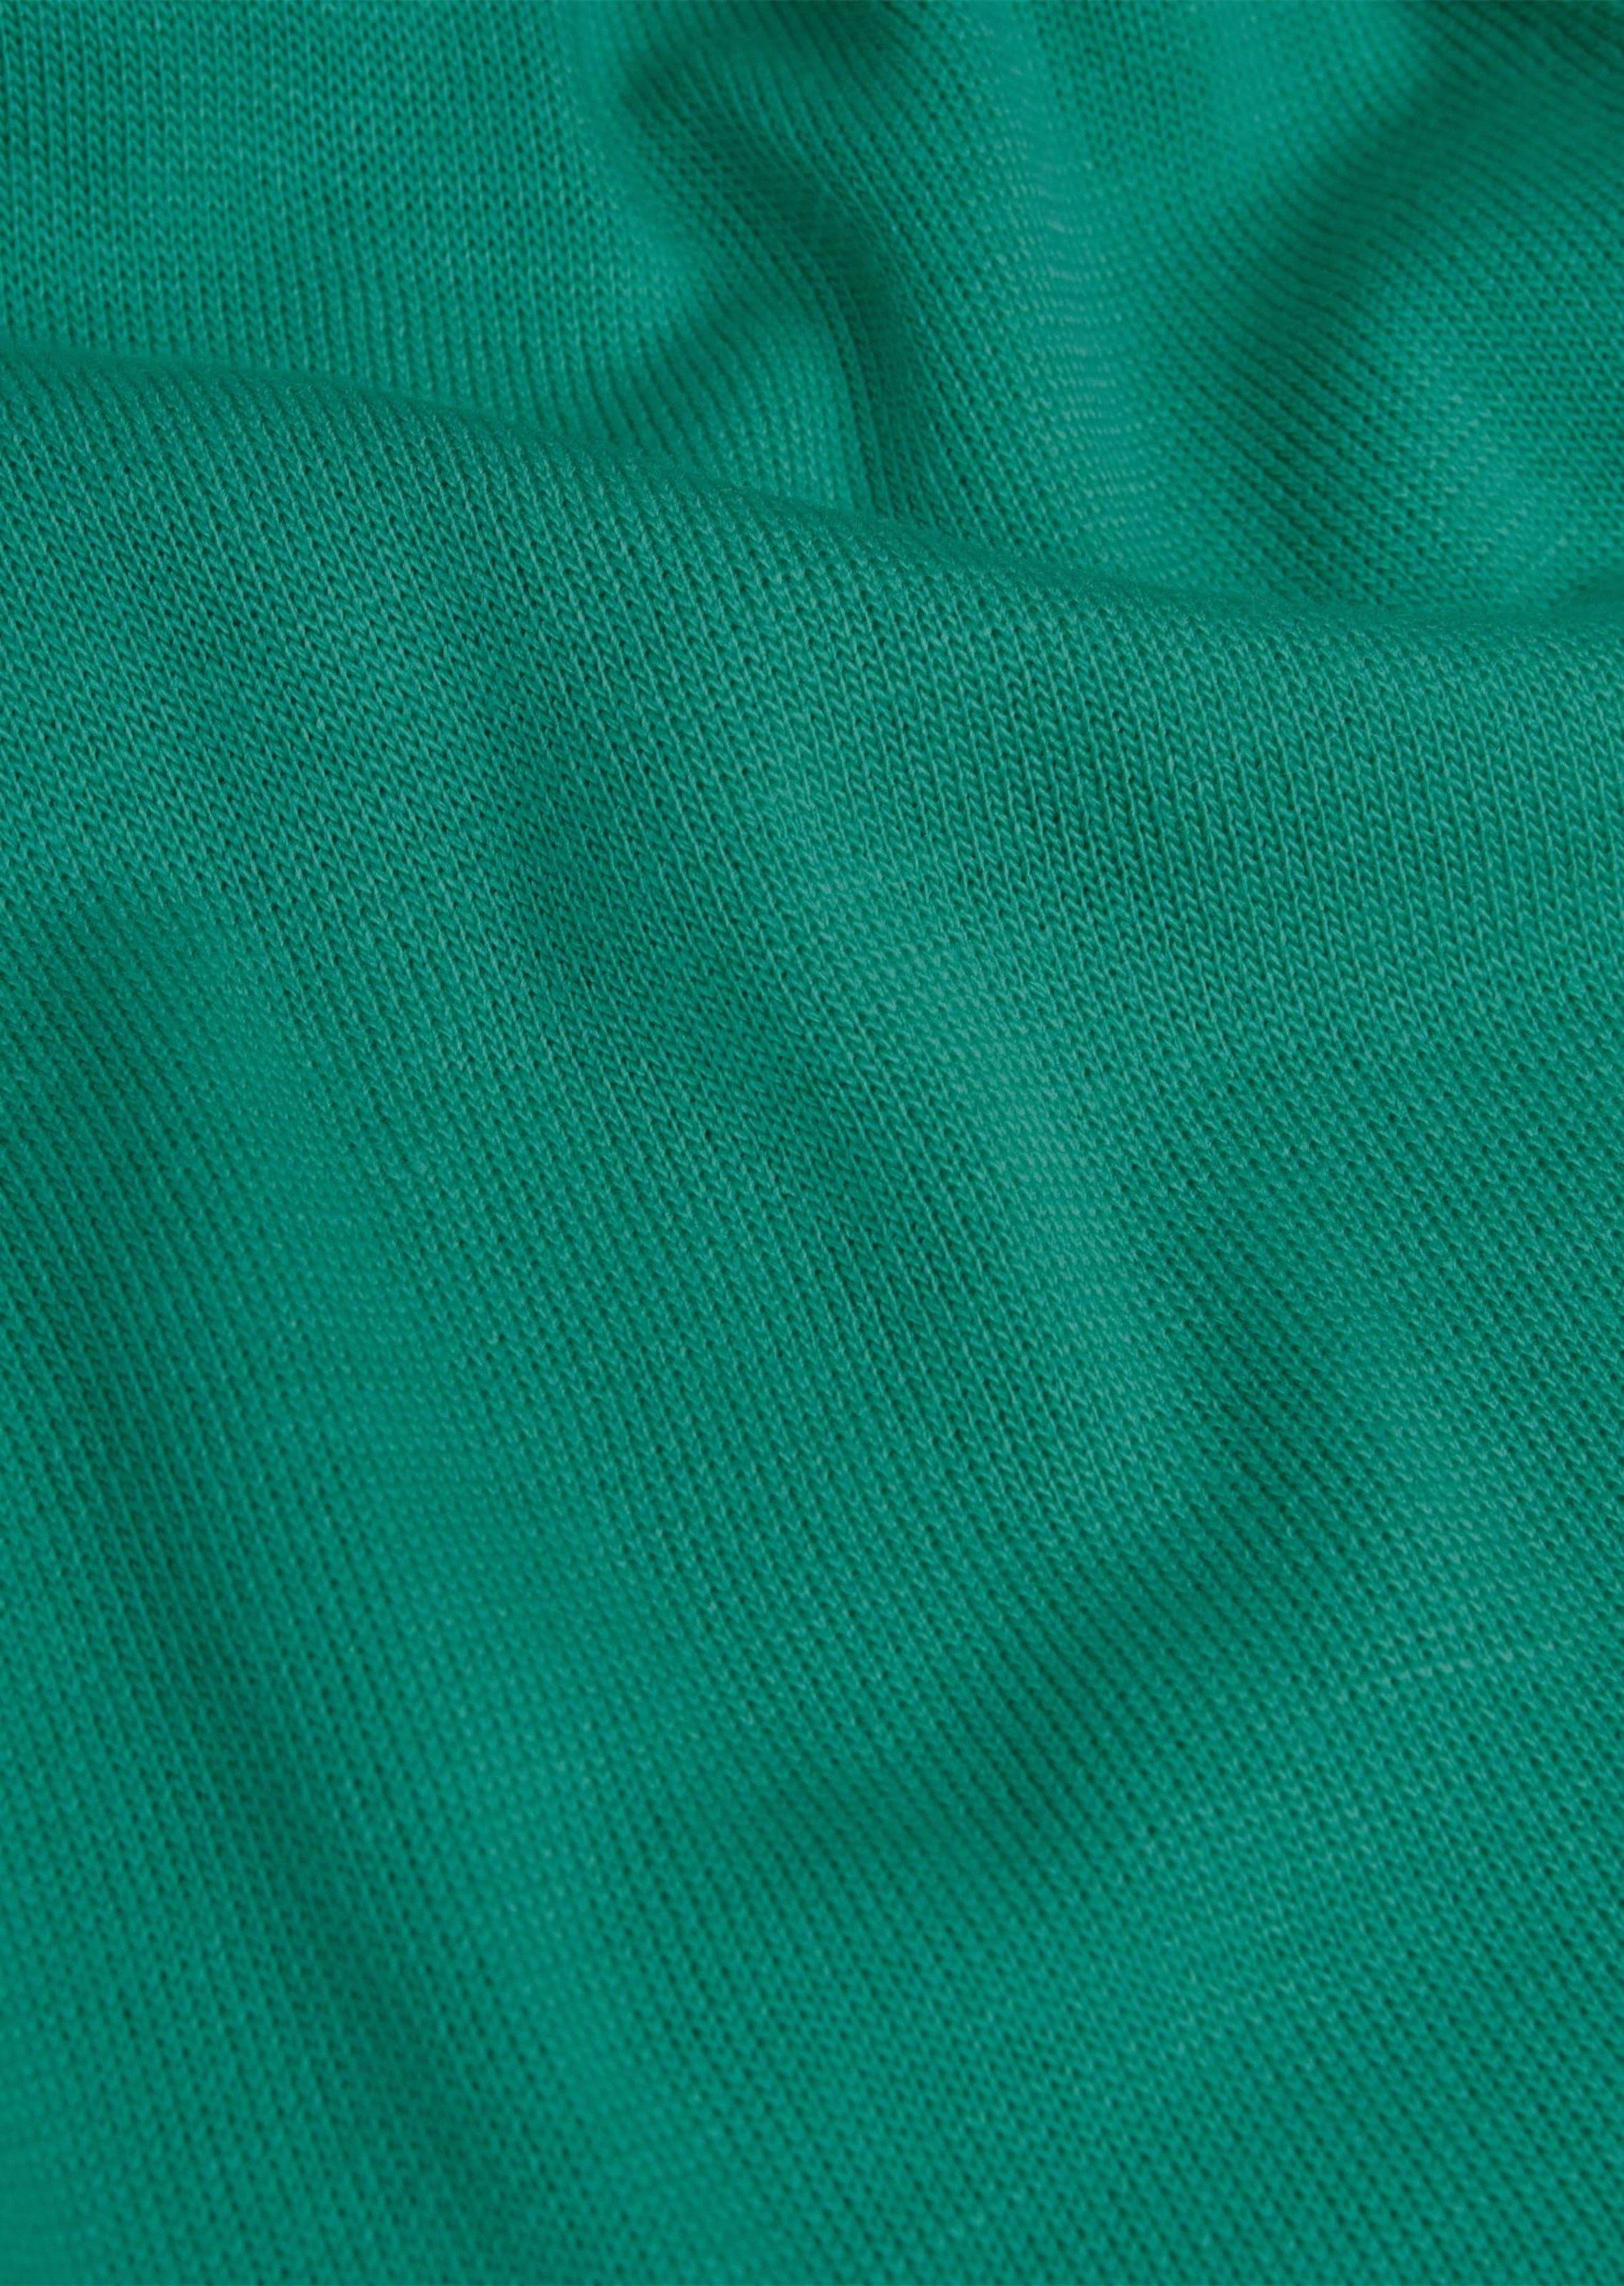 Unkomplizierter smaragd mit Strickpullover GOLDNER V-Ausschnitt Pullover